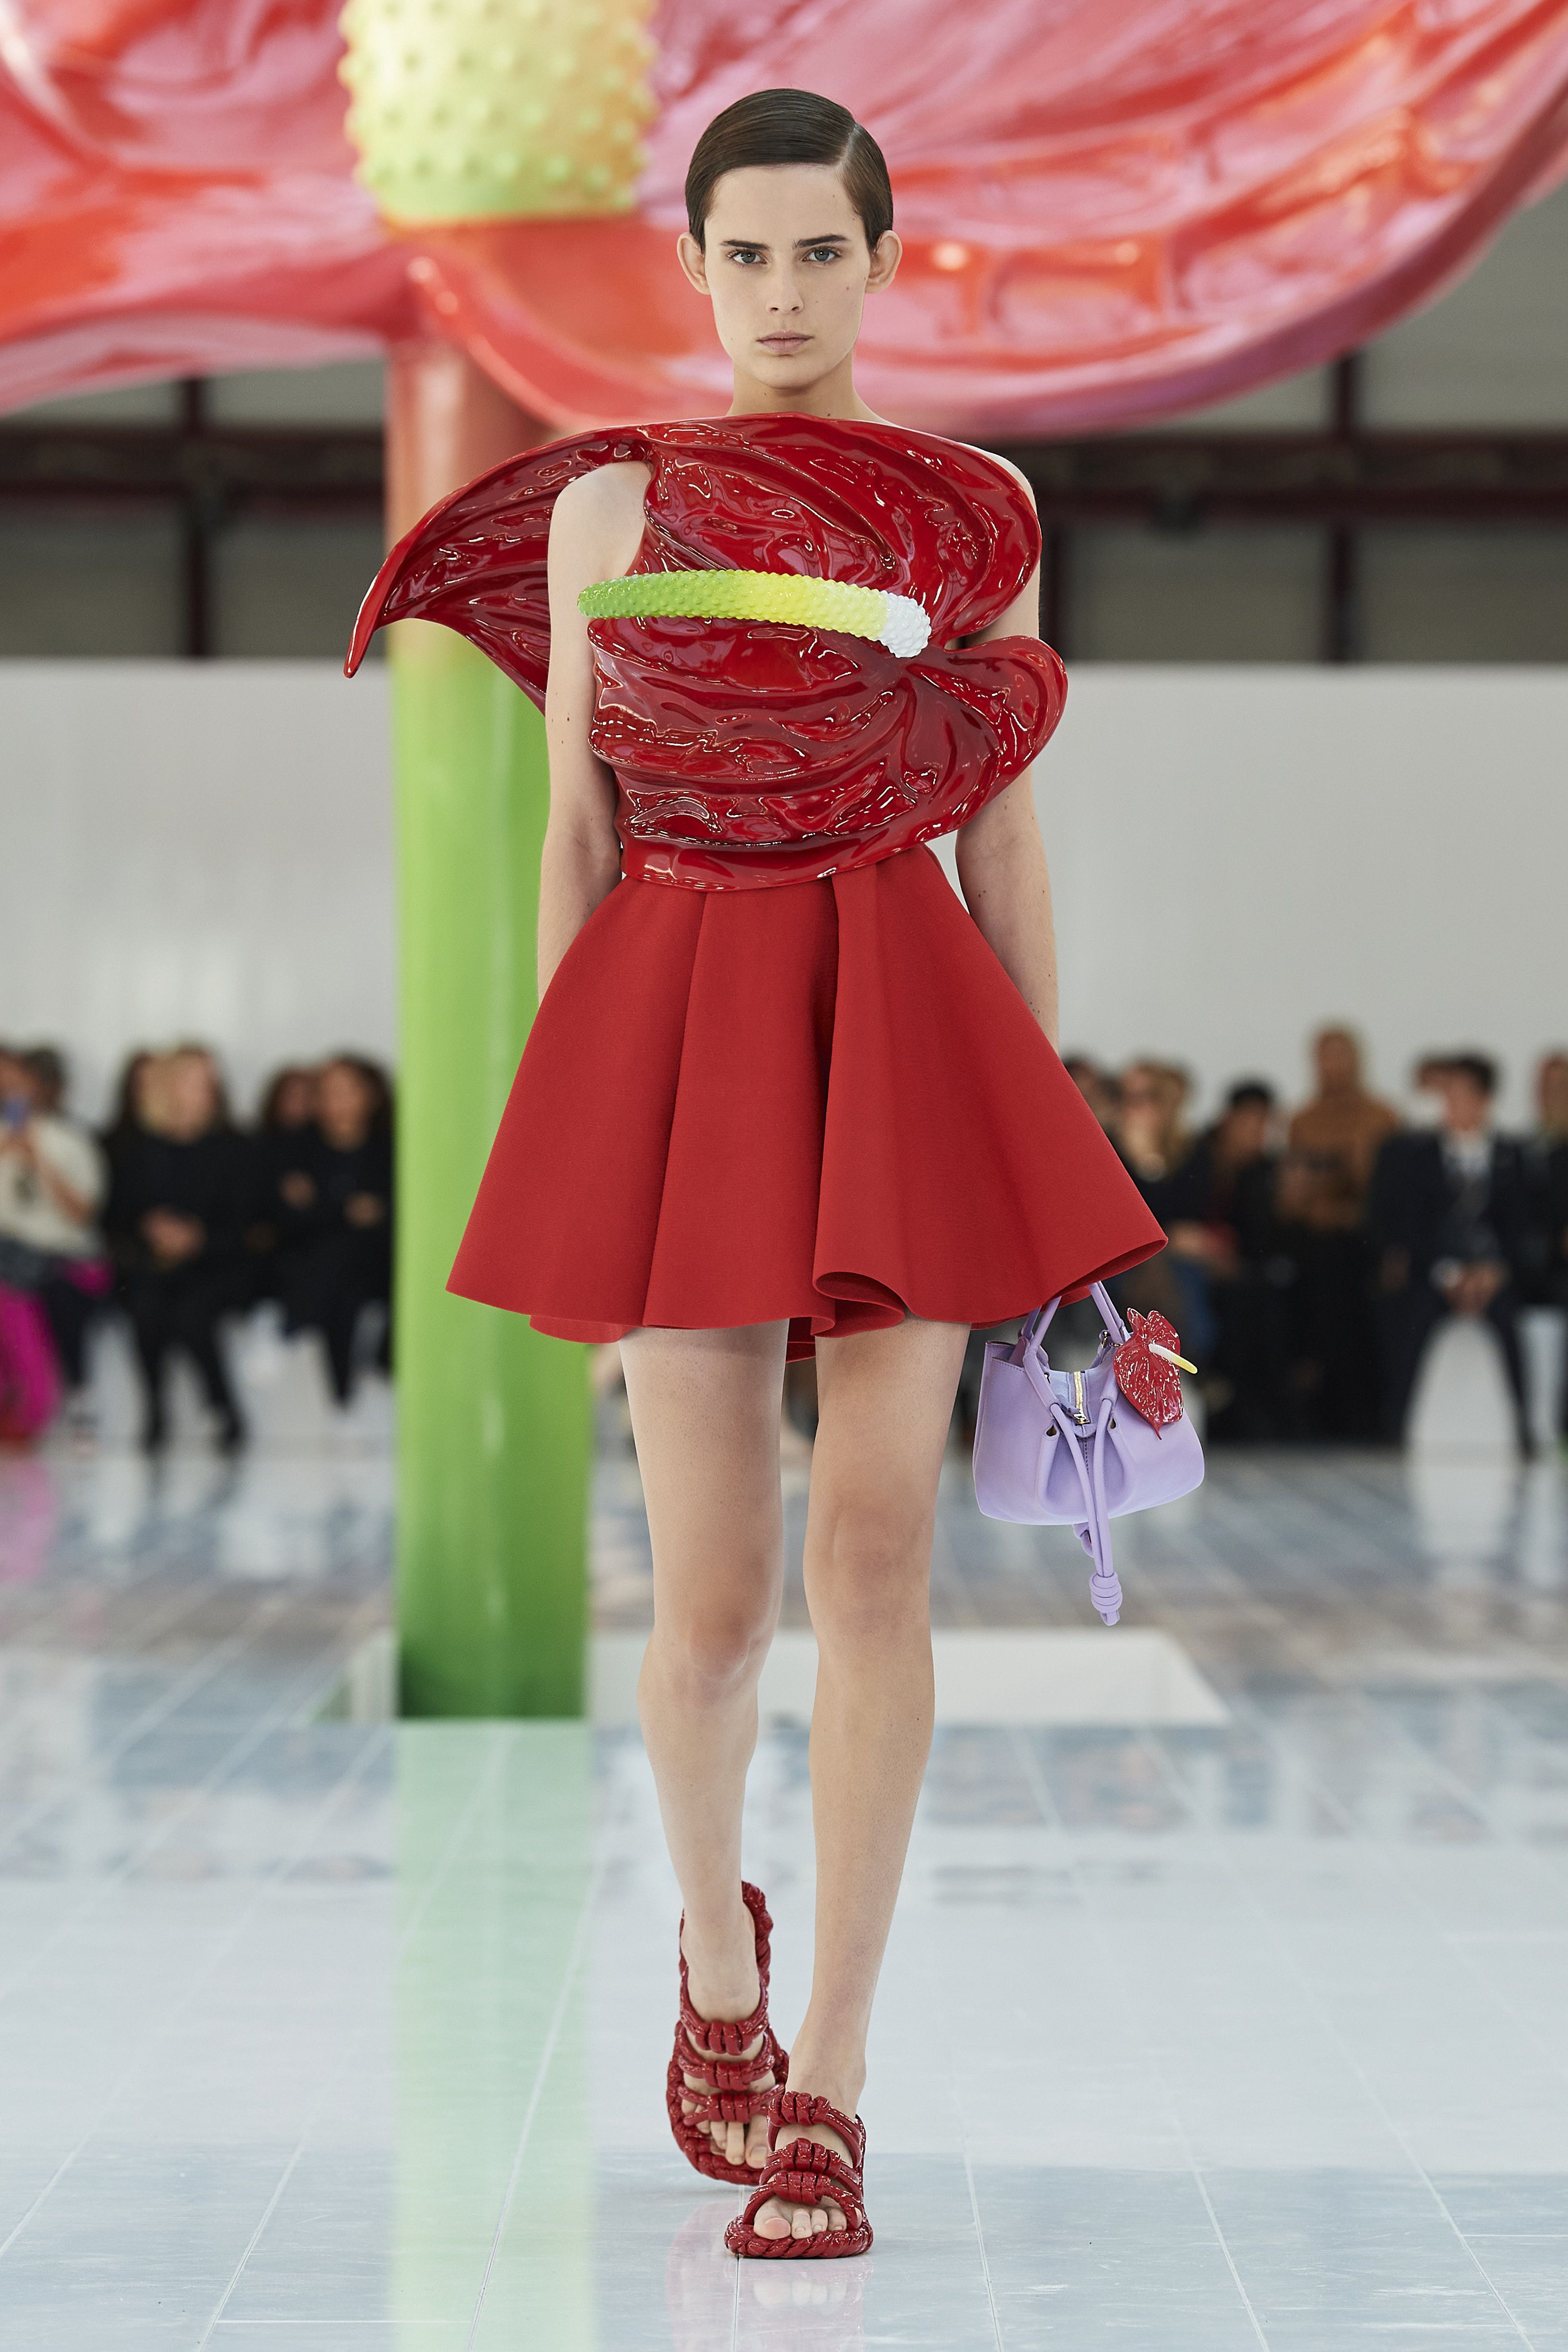 All The Best Looks From Paris Fashion Week | SPLENGO FASHION